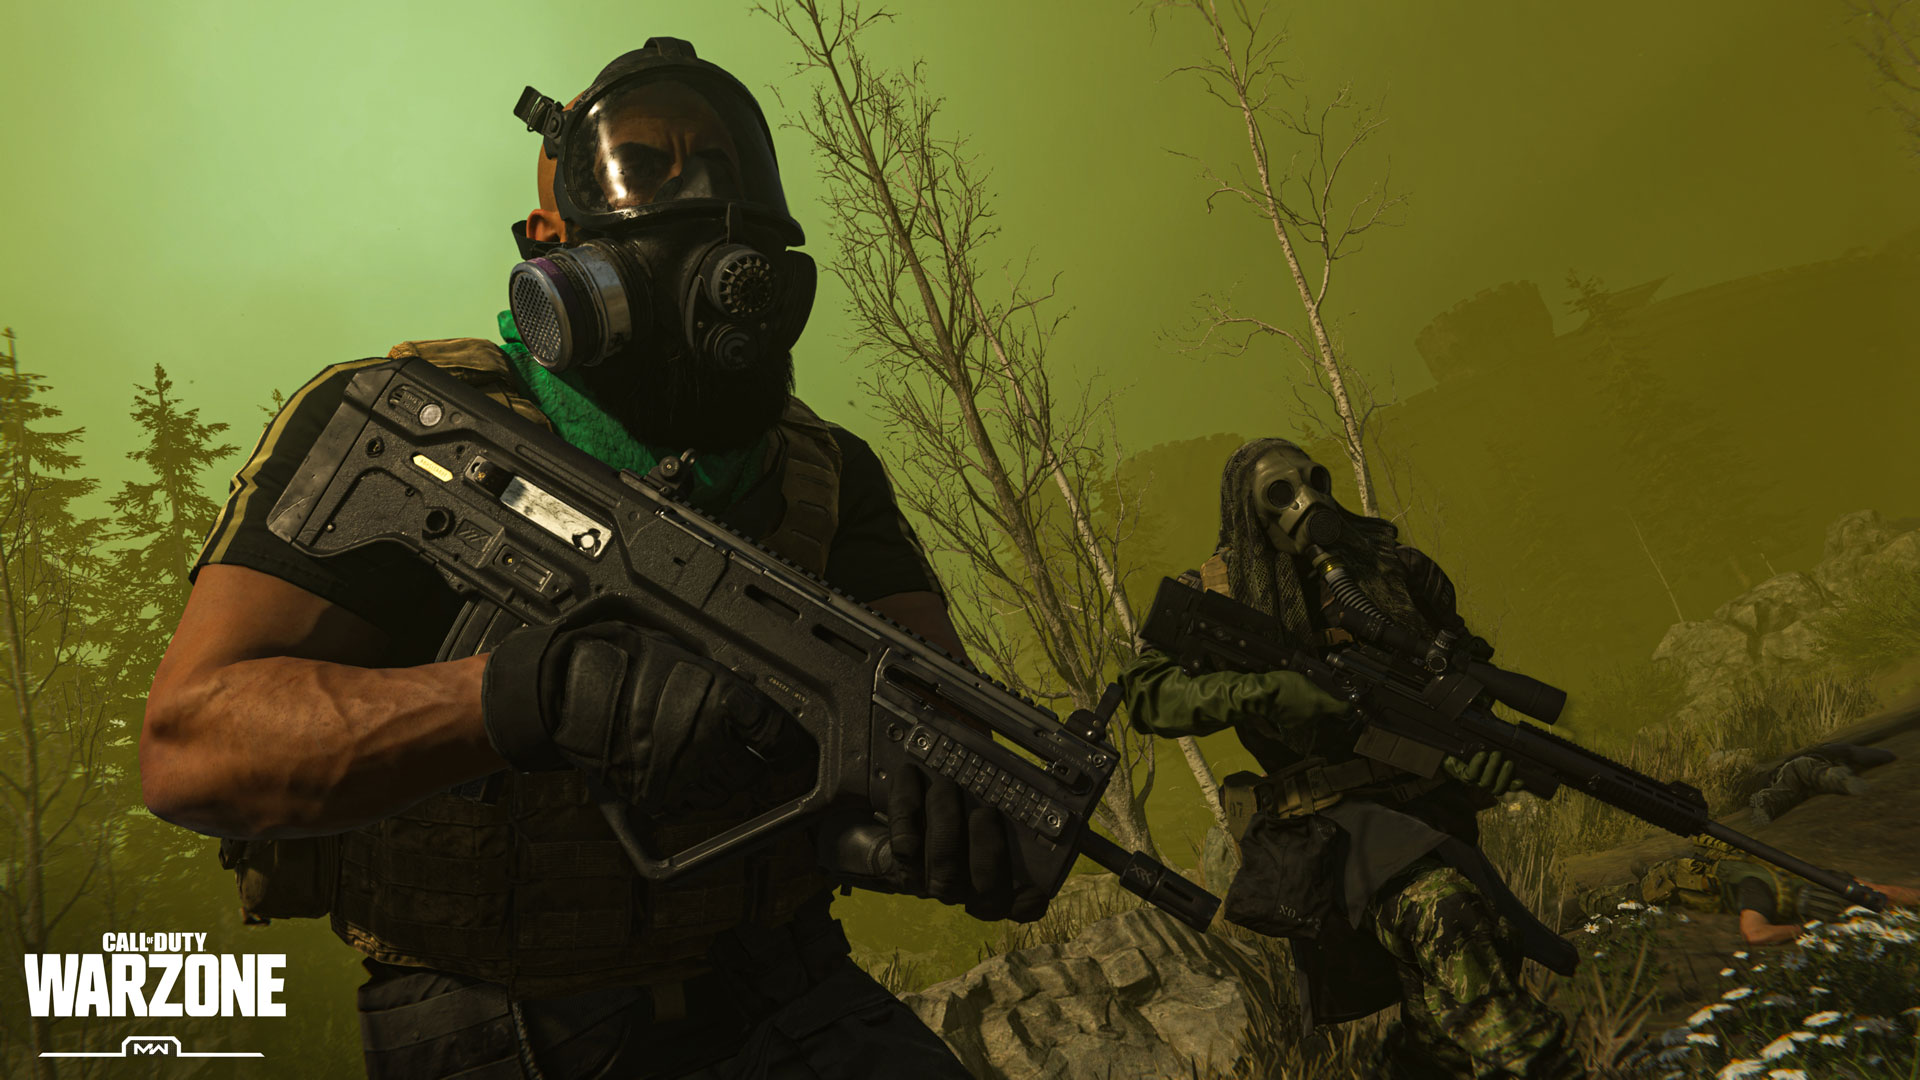 Plus de 100 millions de joueurs mensuels en moyenne pour Call of Duty Warzone en 2020